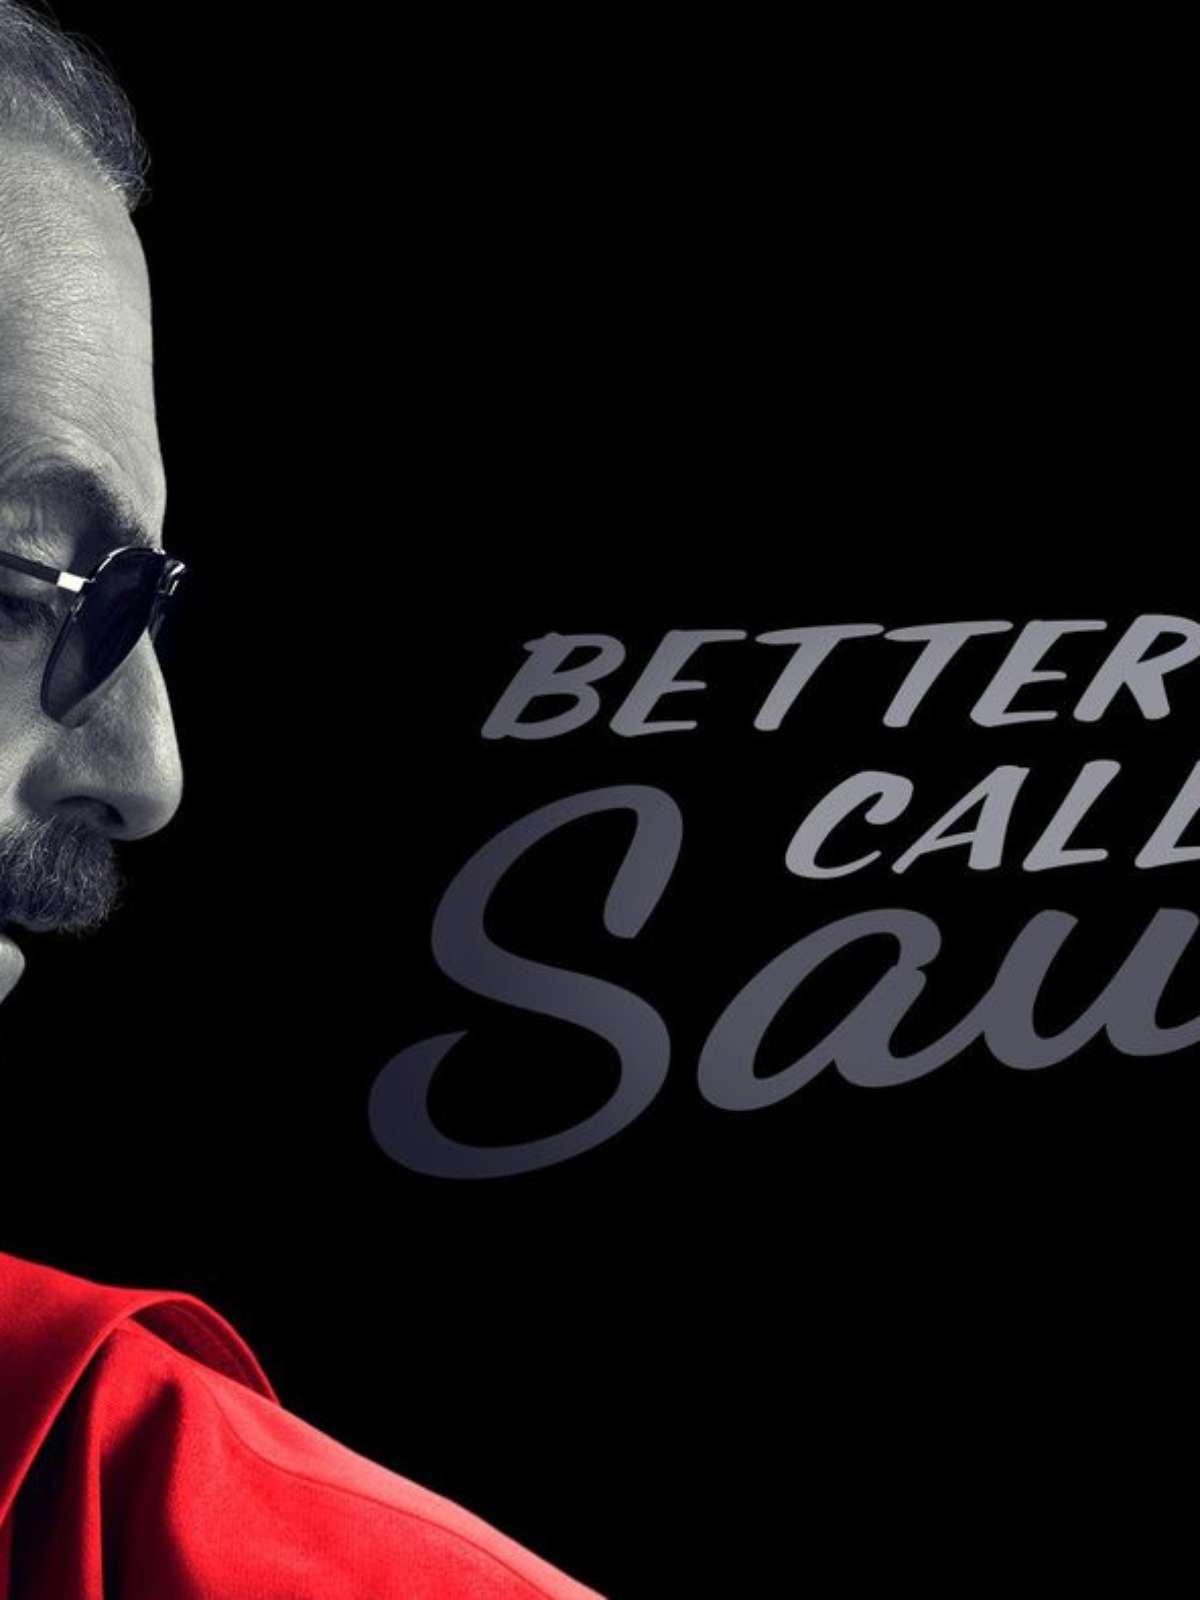 Crítica Better Call Saul  Spin-off de Breaking Bad tem final impecável -  Canaltech